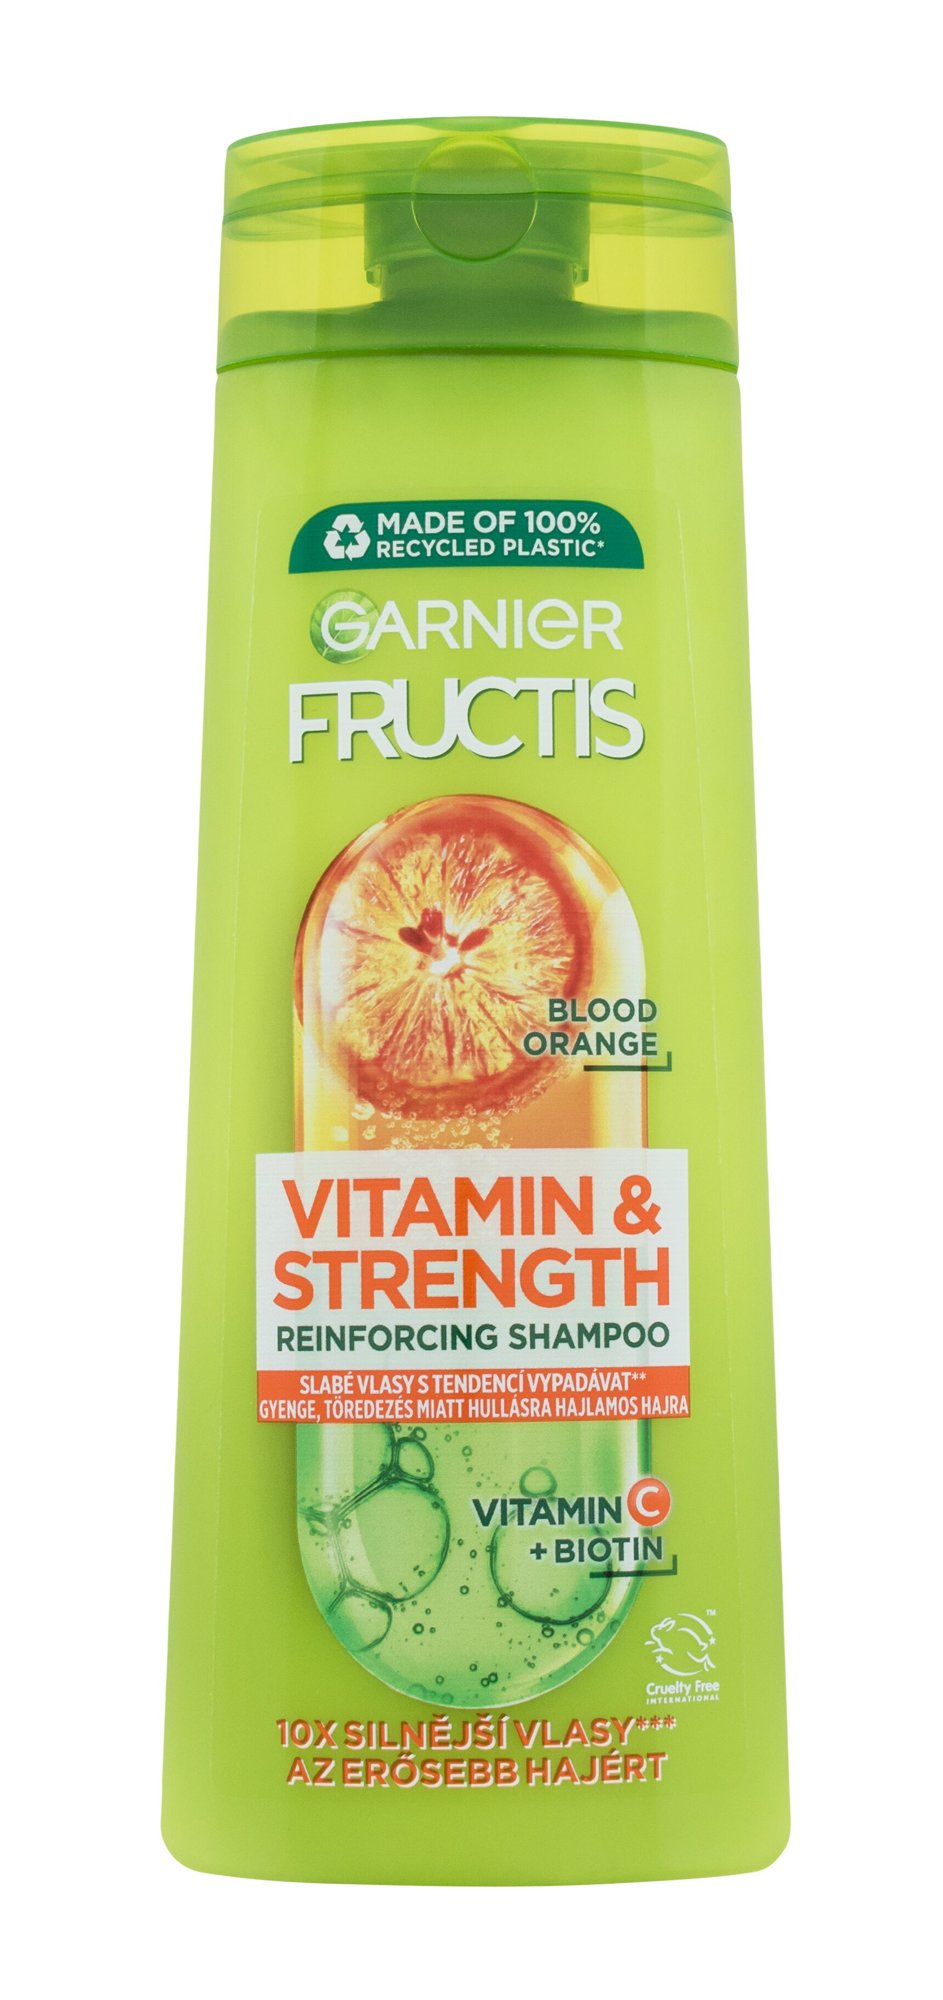 Garnier Fructis Vitamin & Strength Reinforcing Shampoo šampūnas